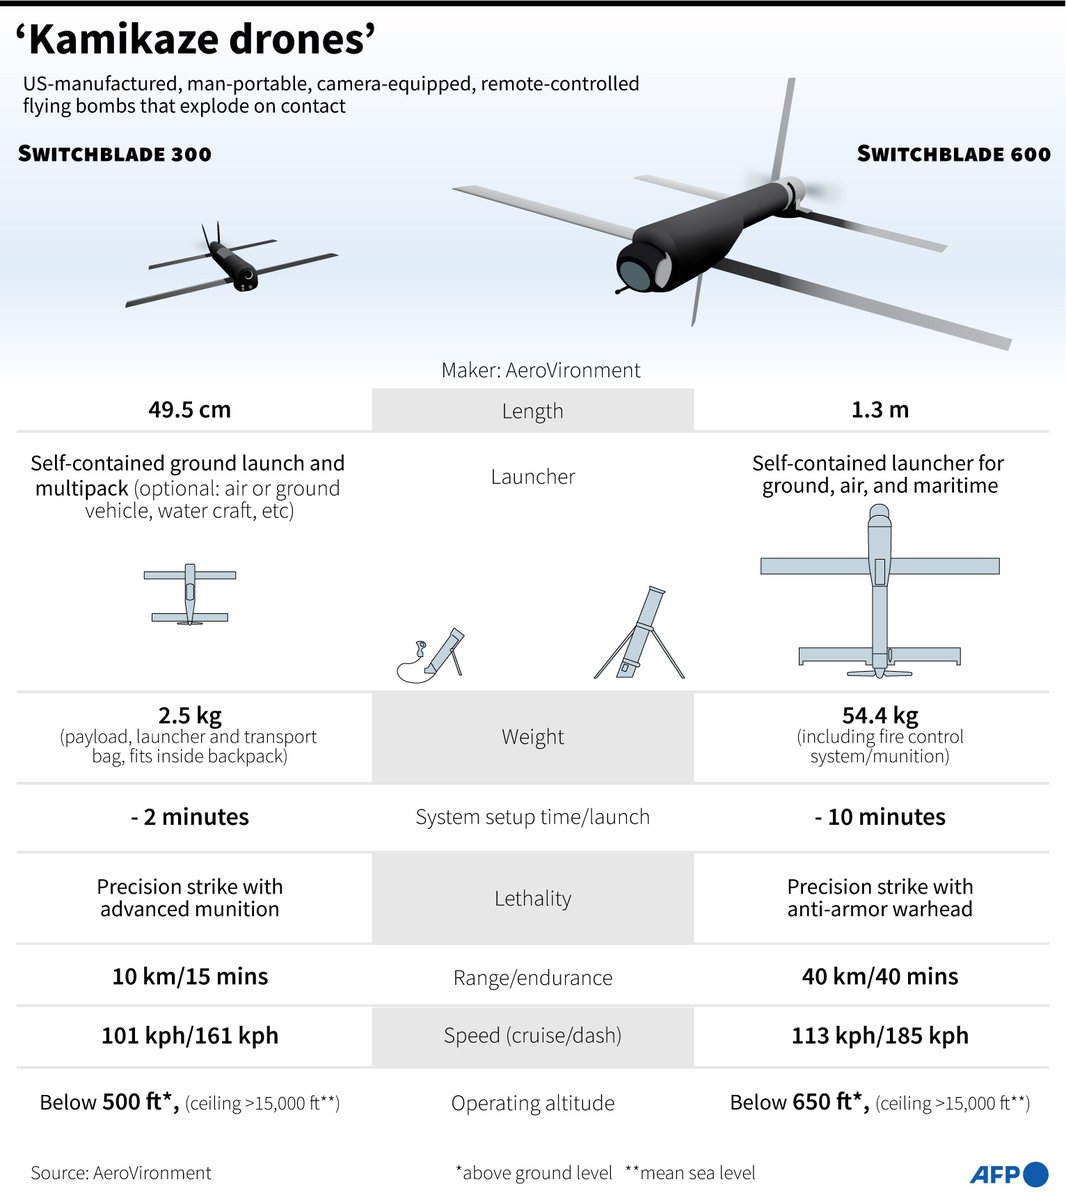 Kamikaze Switchblade drone model comparison